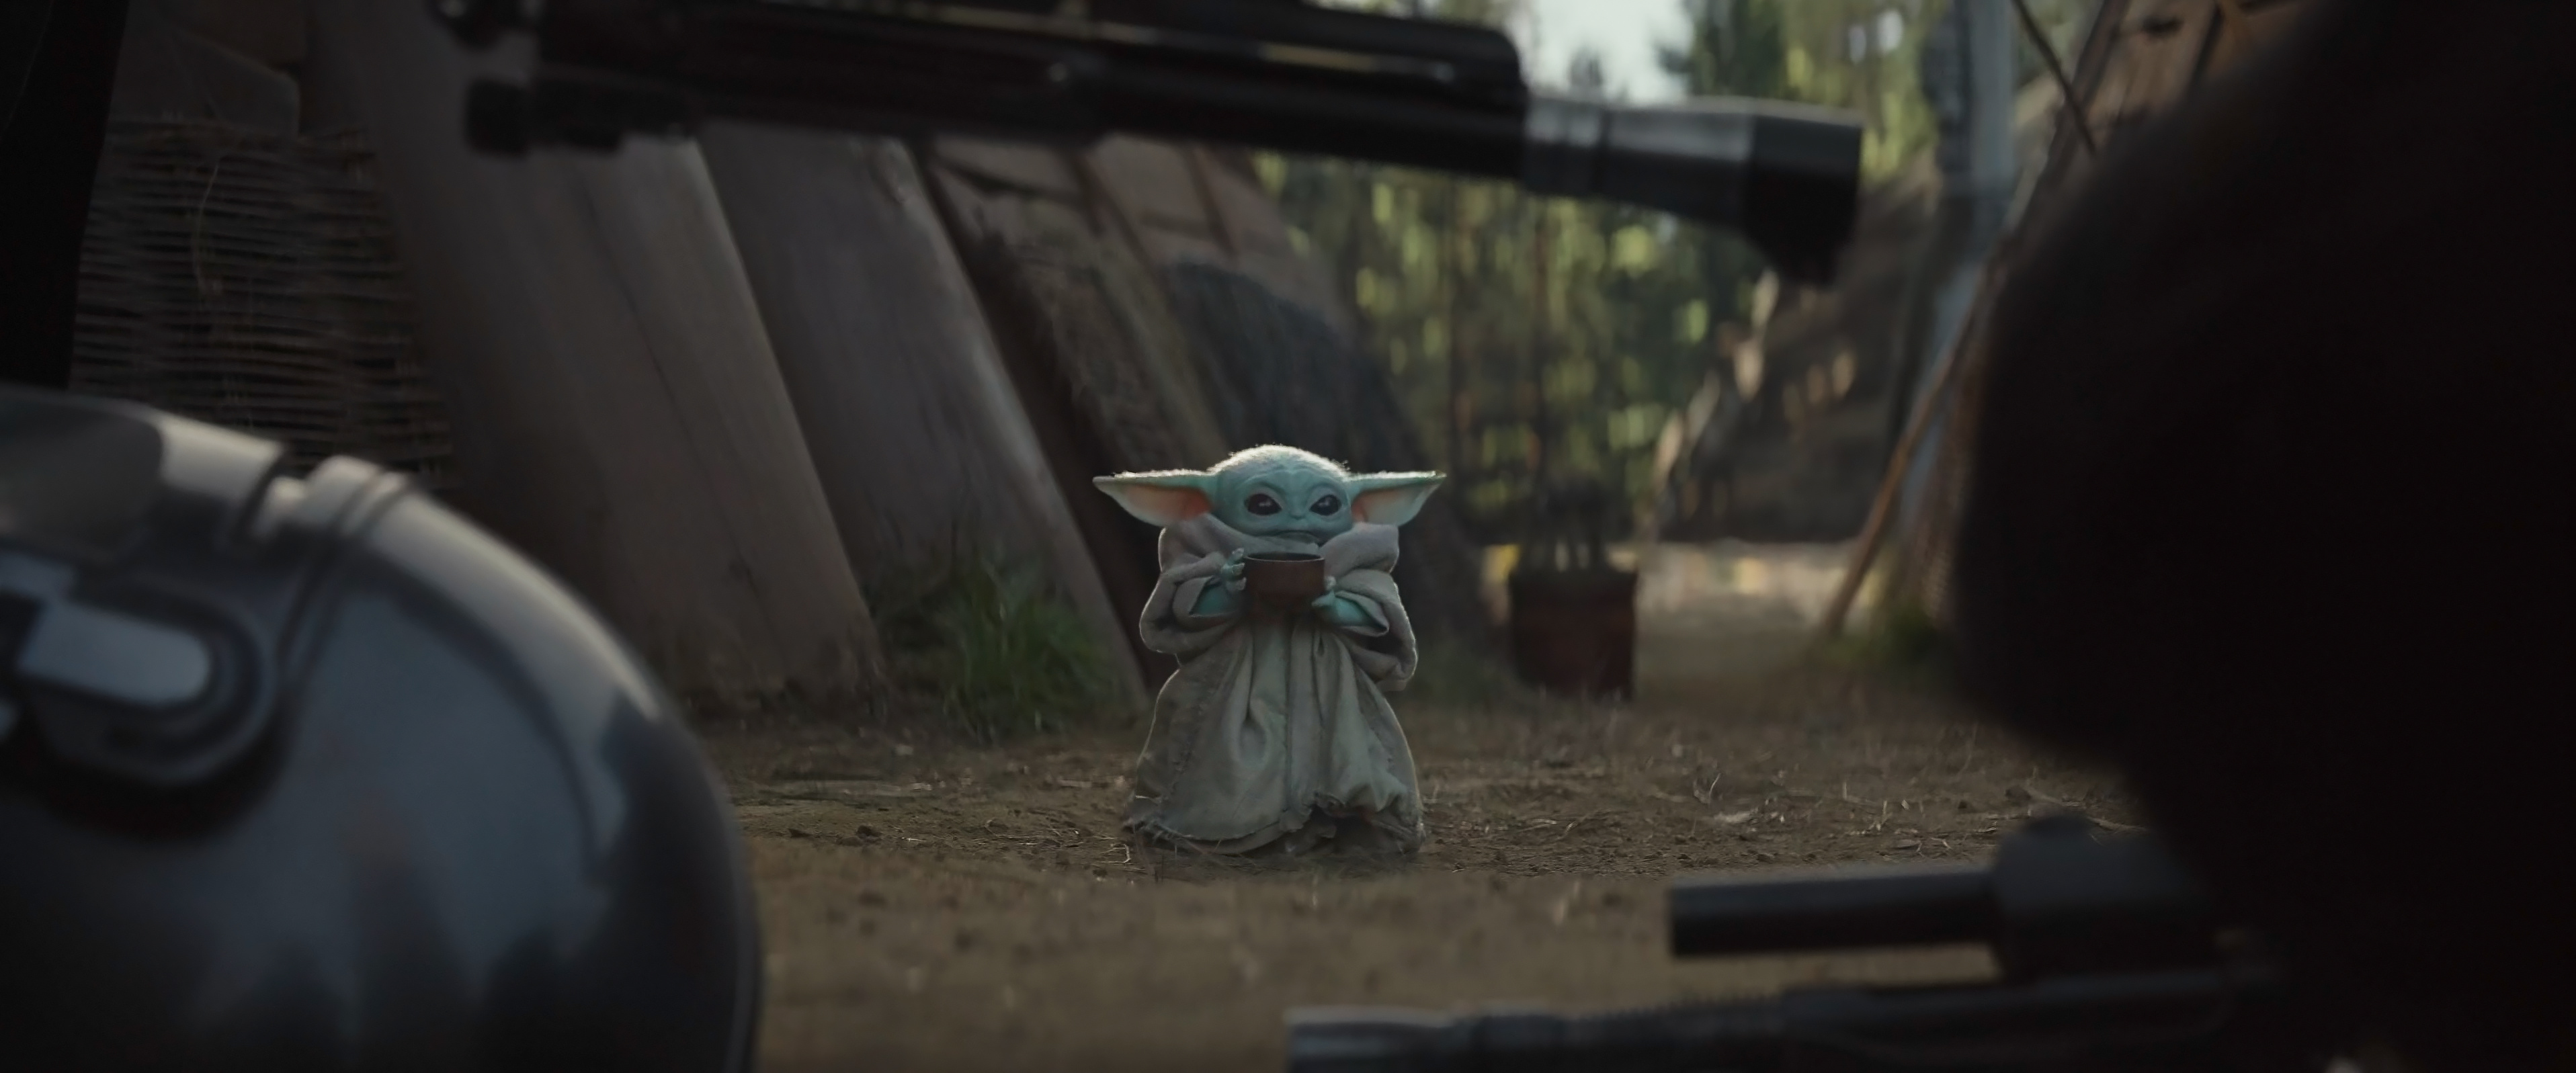 Cute Baby Yoda, Star Wars universe, Adorable character, Movie franchise, 3840x1600 Dual Screen Desktop